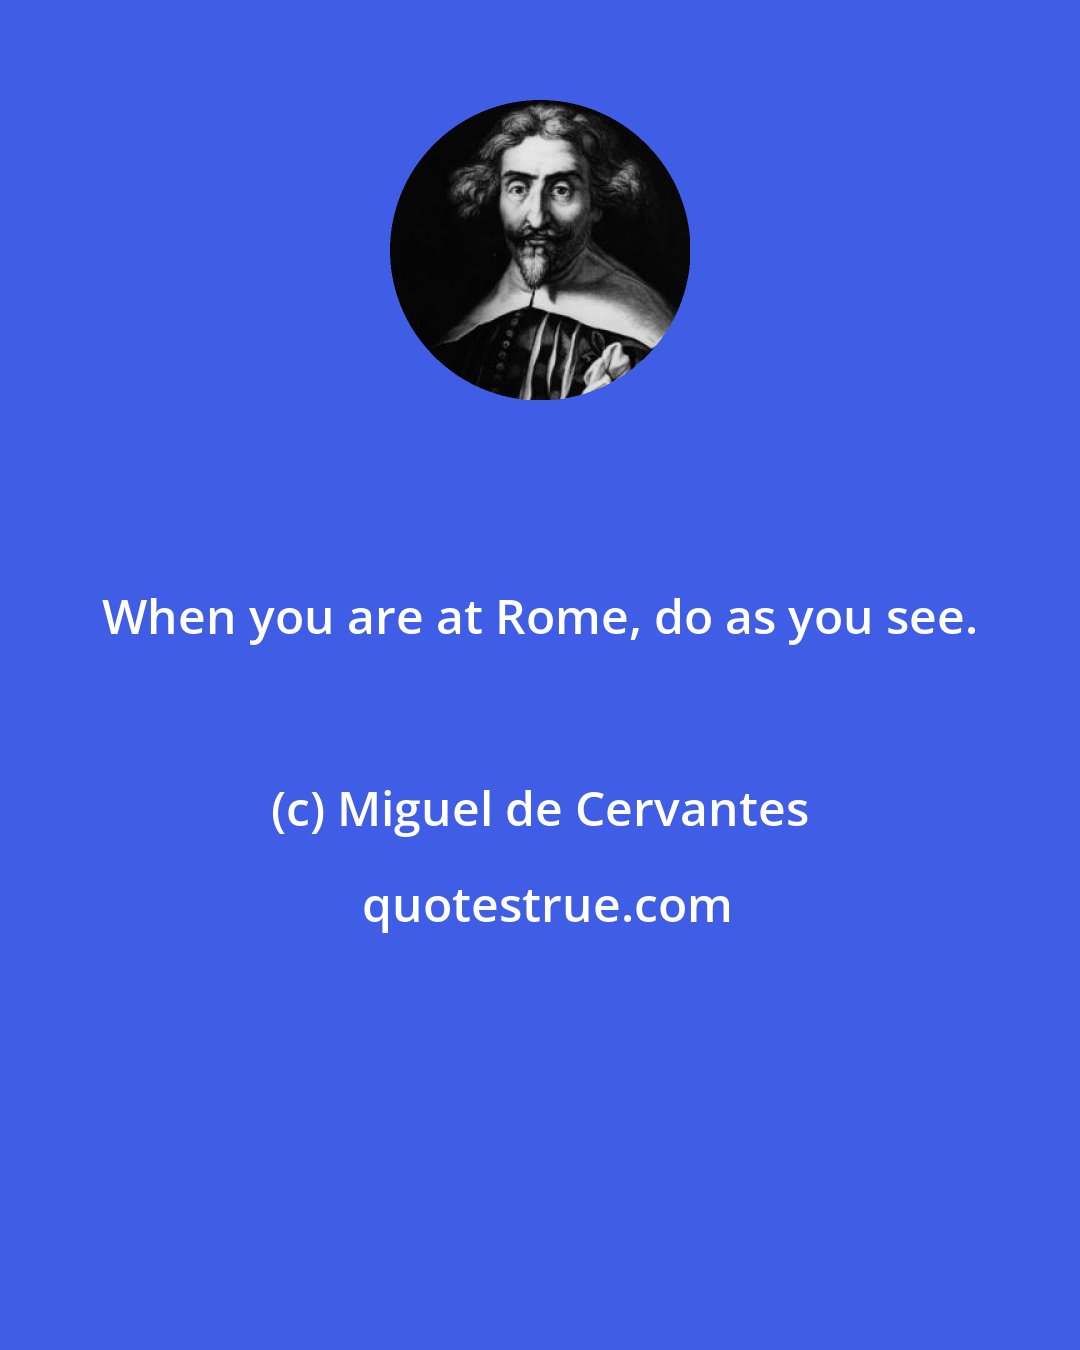 Miguel de Cervantes: When you are at Rome, do as you see.